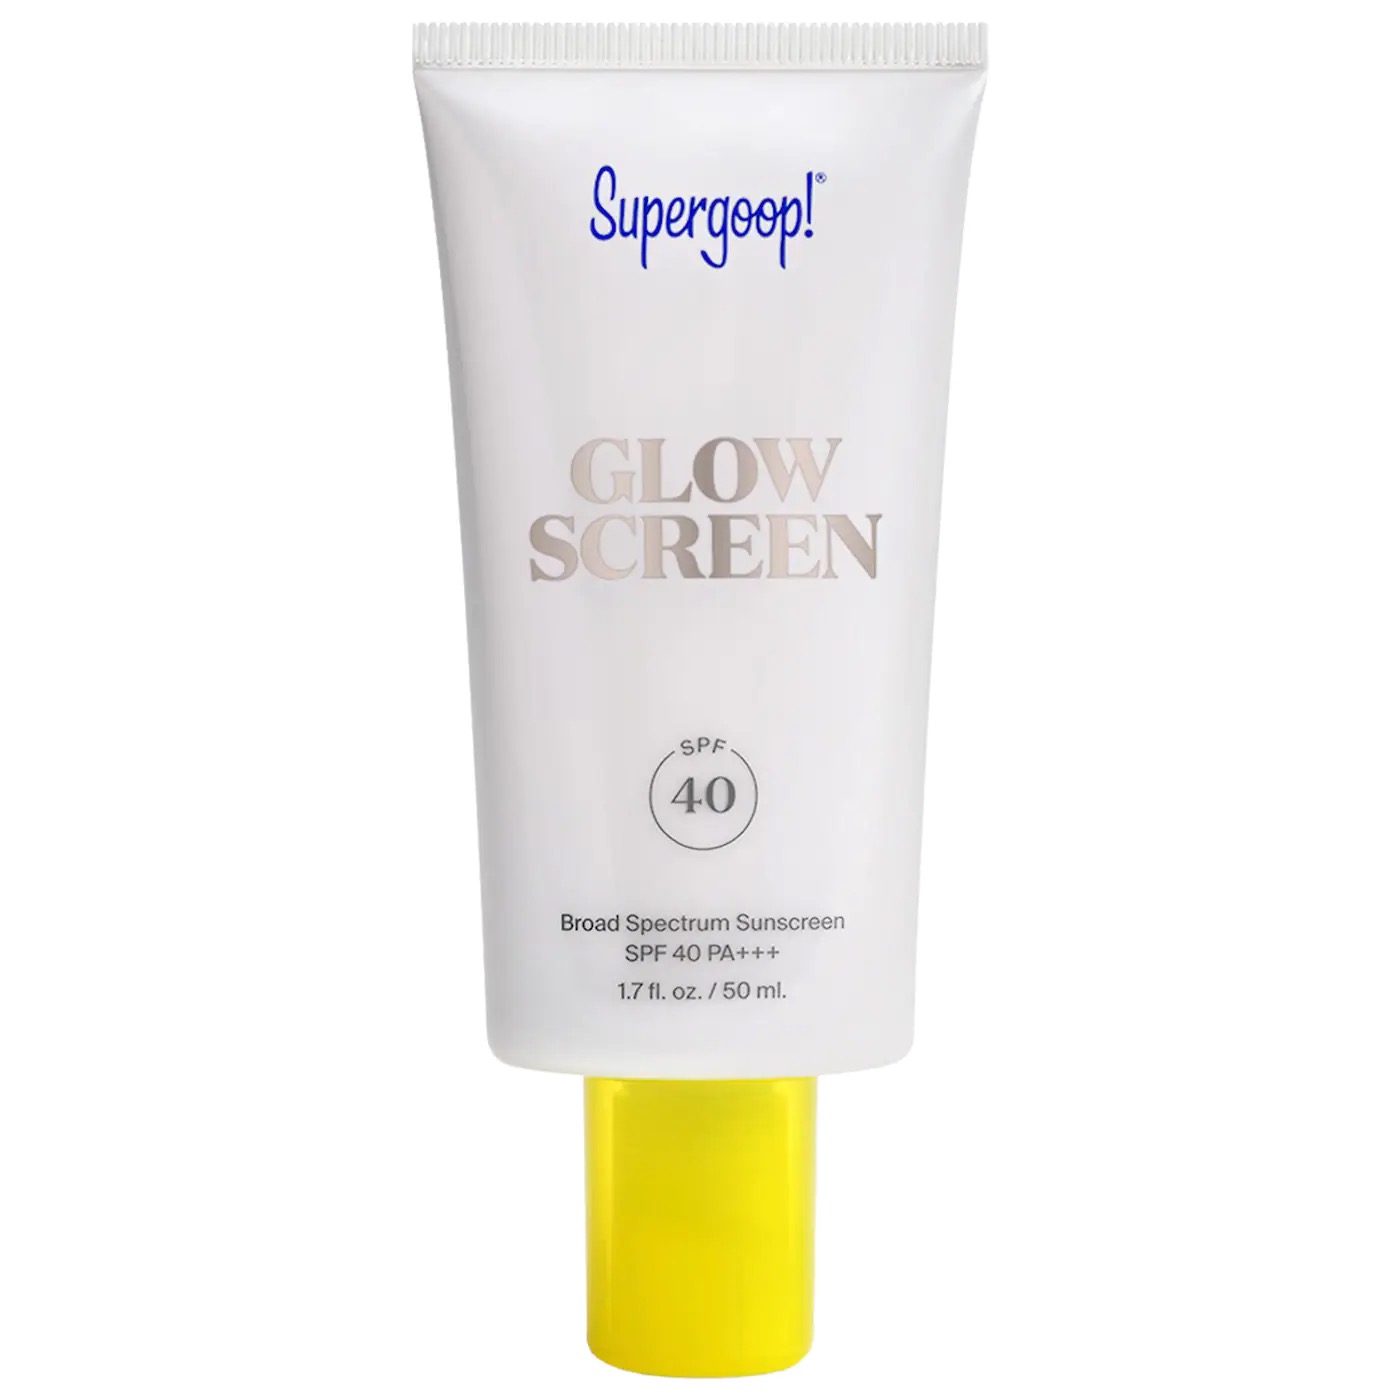 Sunglow sunscreen